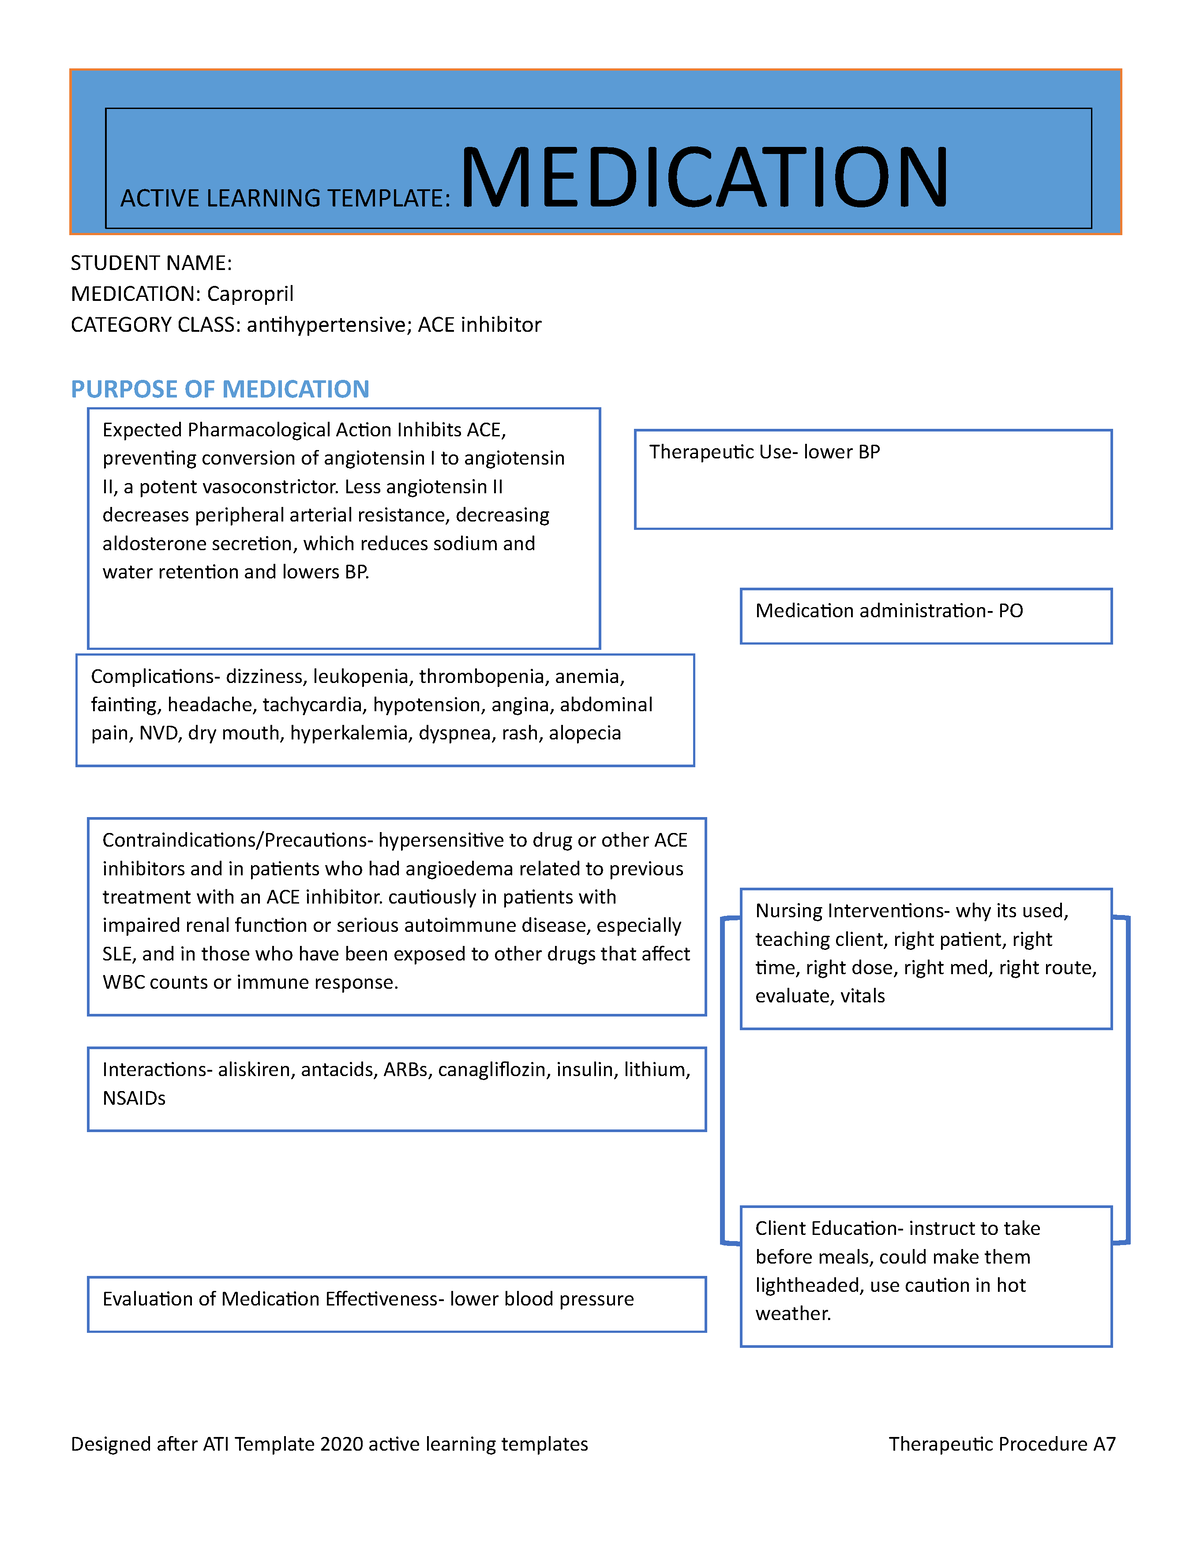 Captopril ati medication template STUDENT NAME MEDICATION Capropril